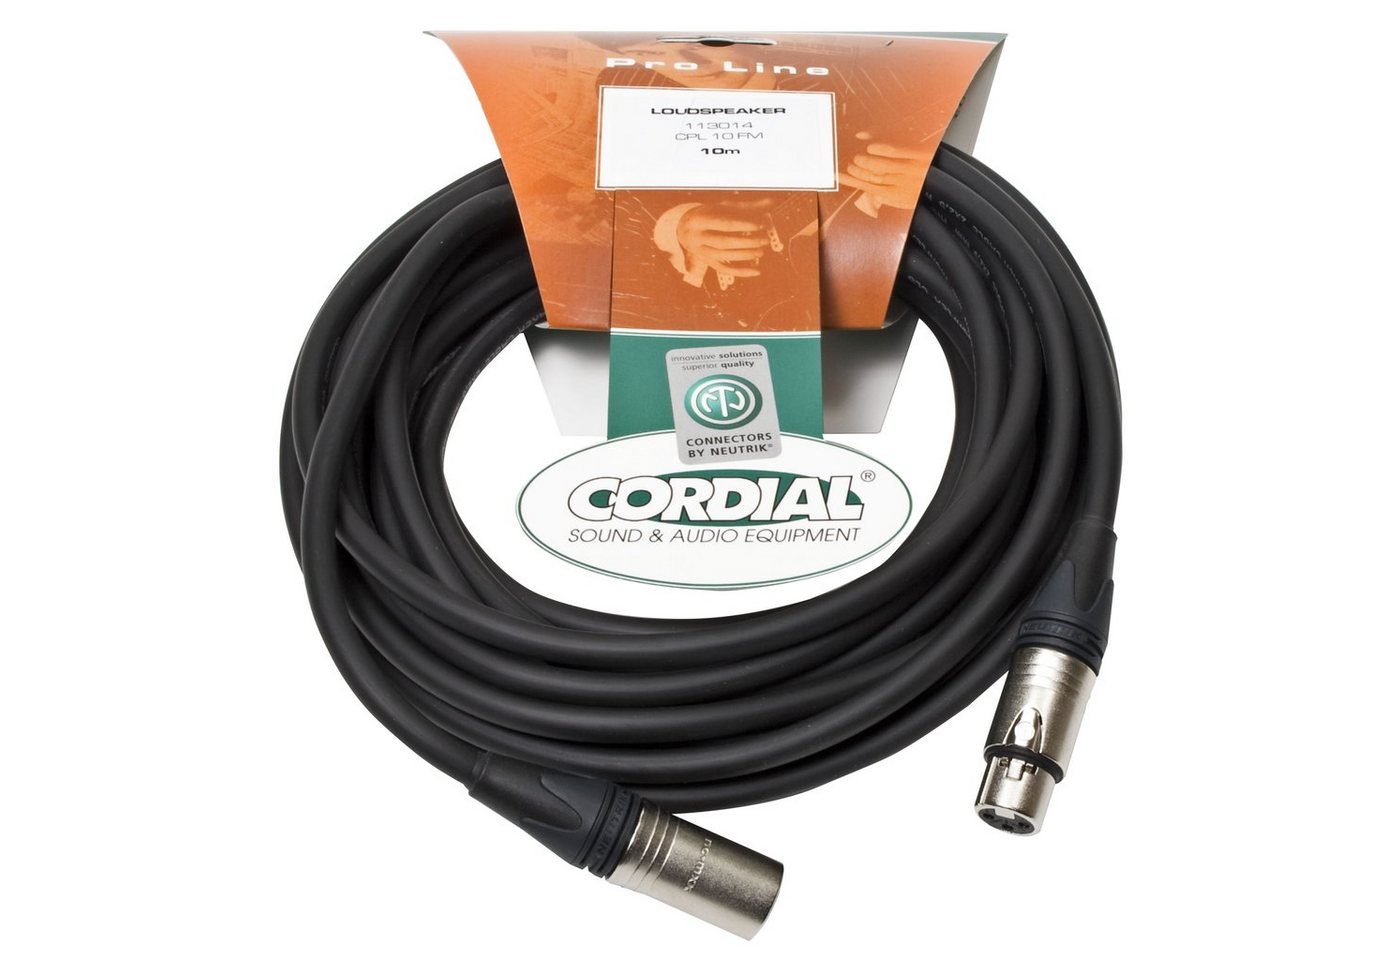 Cordial Audio-Kabel, CPL 10 FM Lautsprecherkabel 10 m - Lautsprecherkabel von Cordial